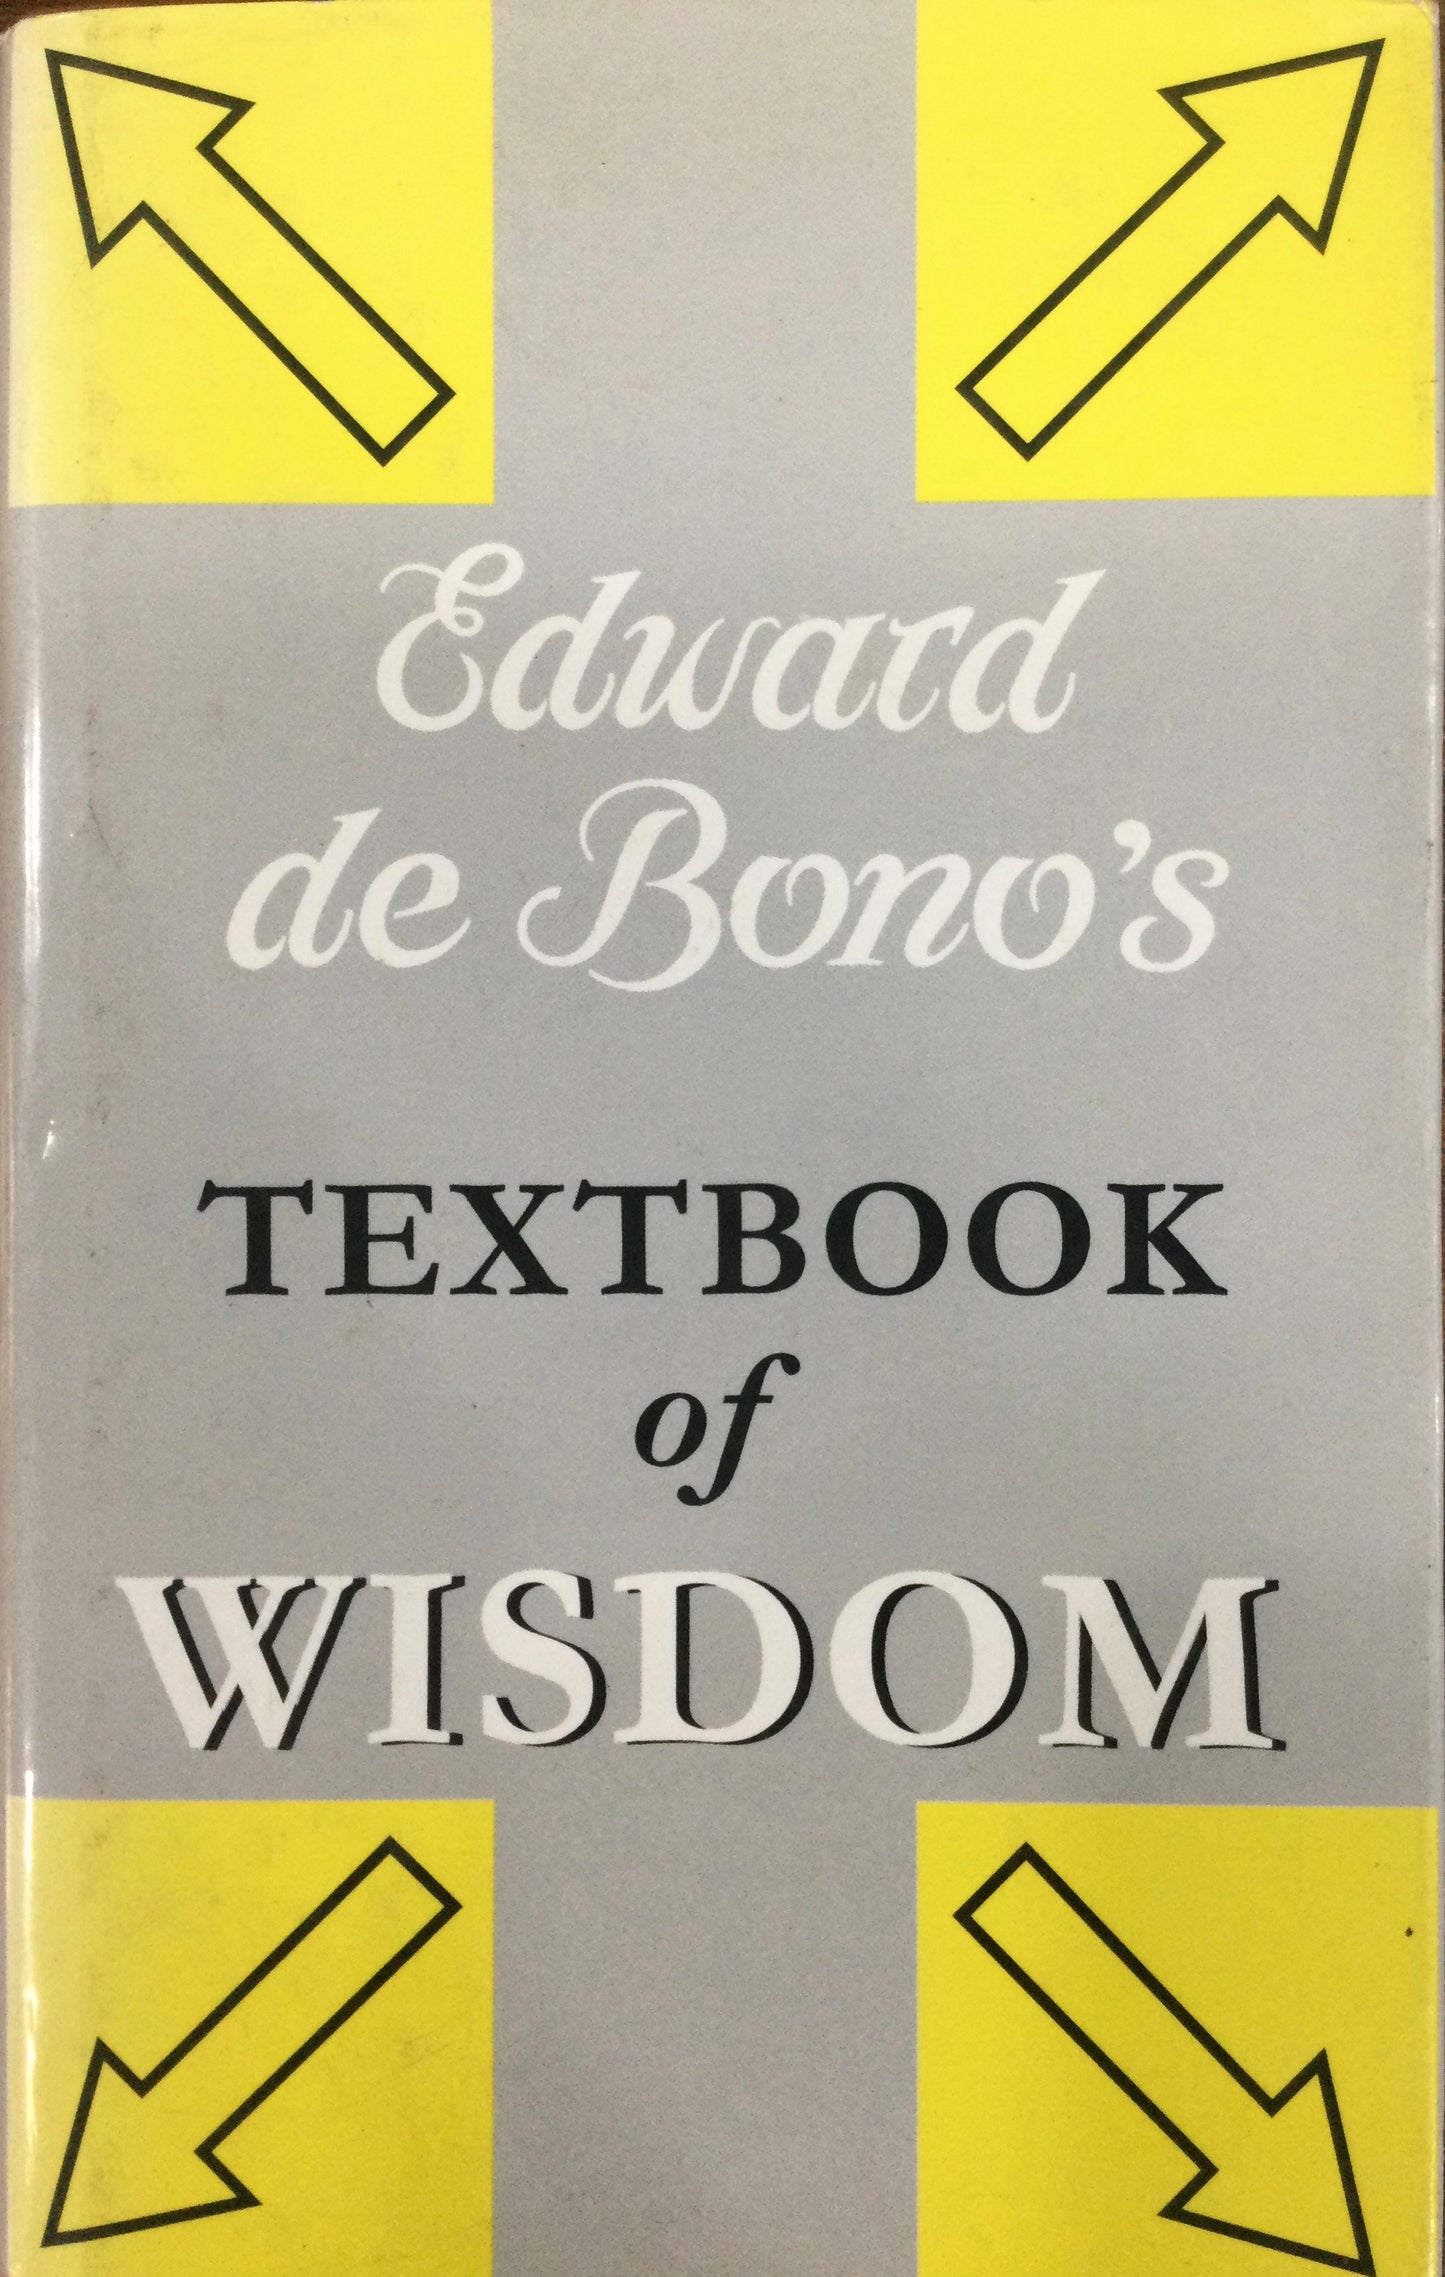 Textbook Of Wisdom, by Edward De Bono (Used, hardcover)